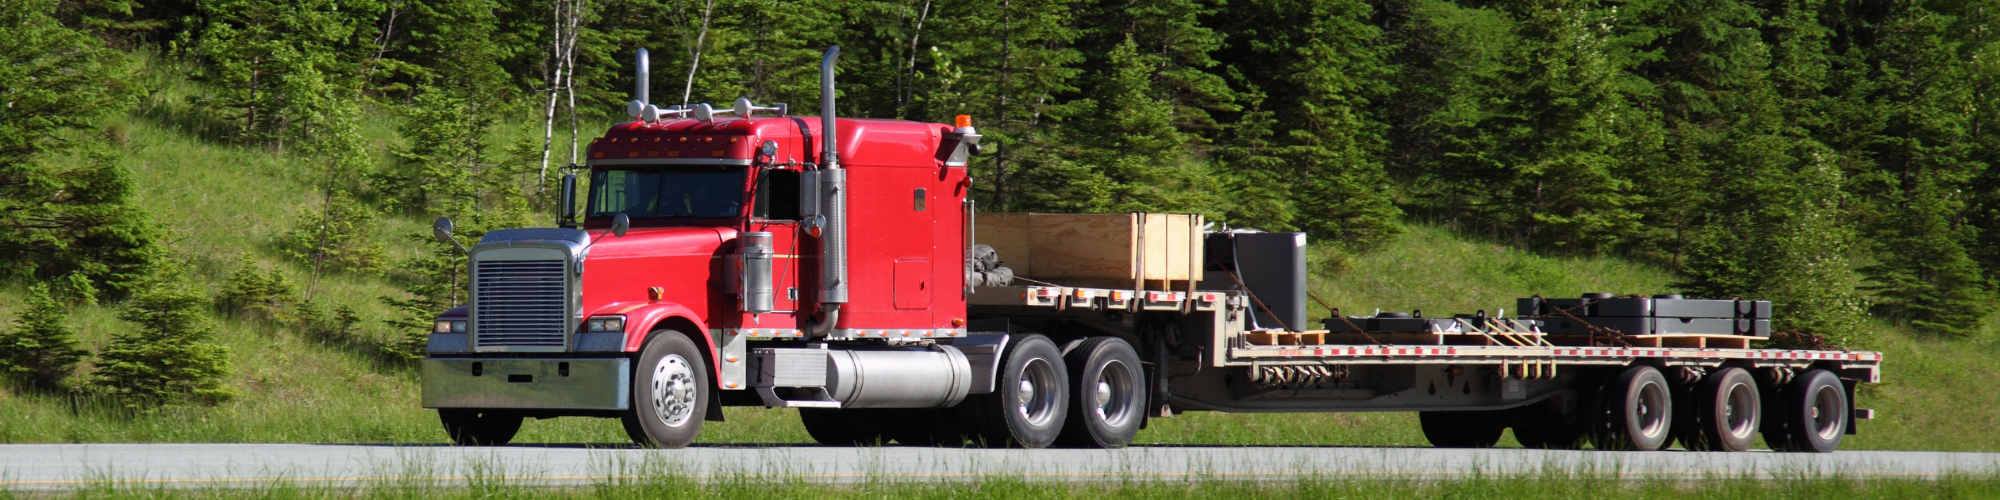 red semi-truck hauling equipment 